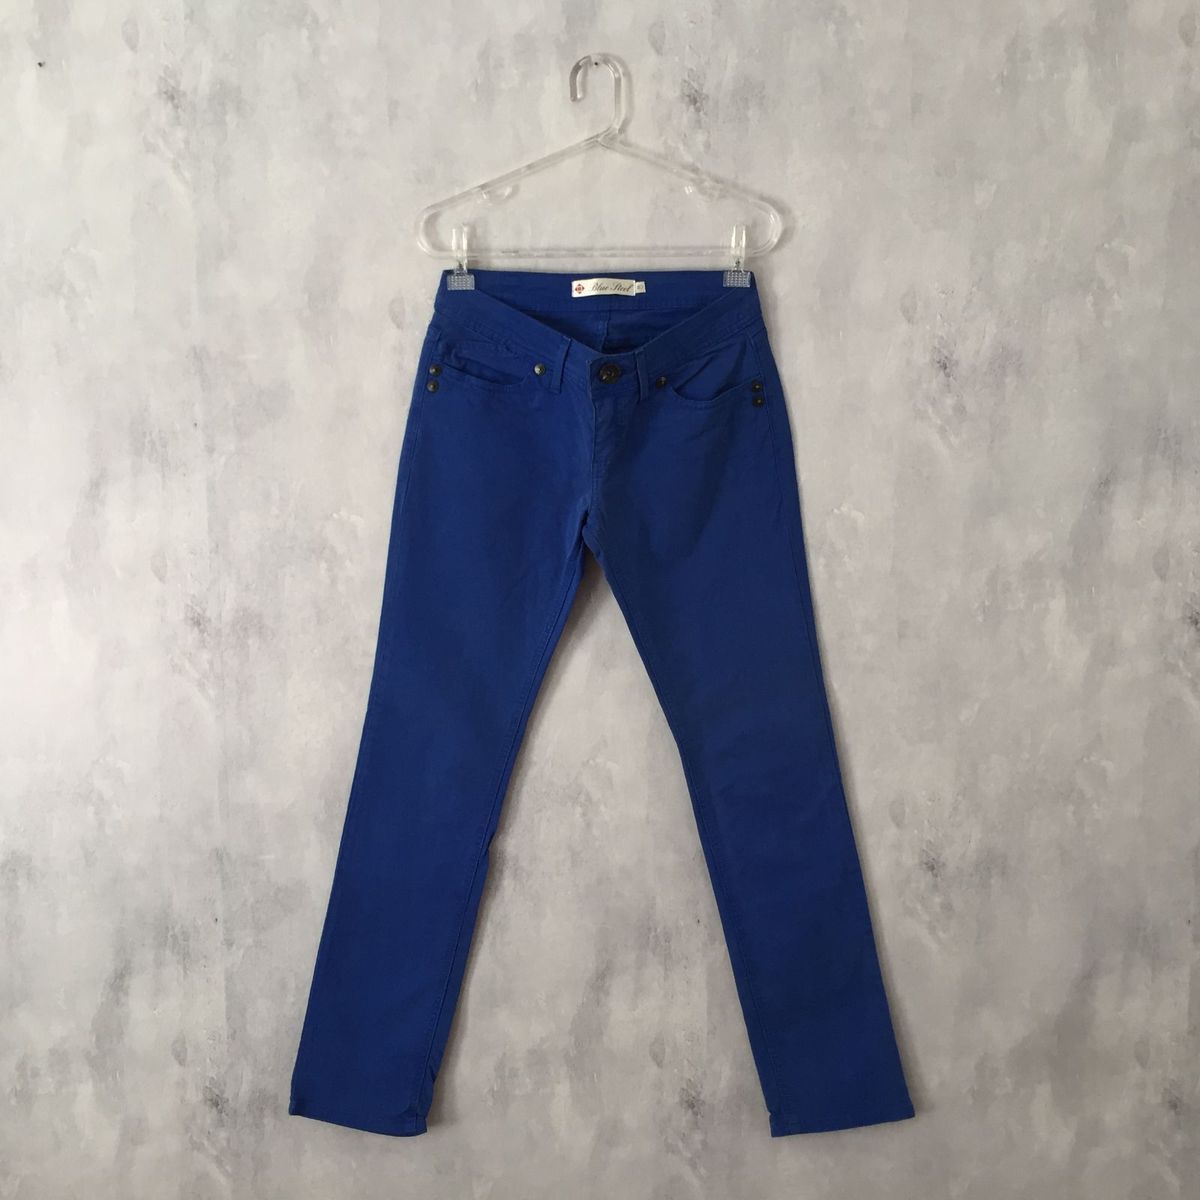 jeans color azul